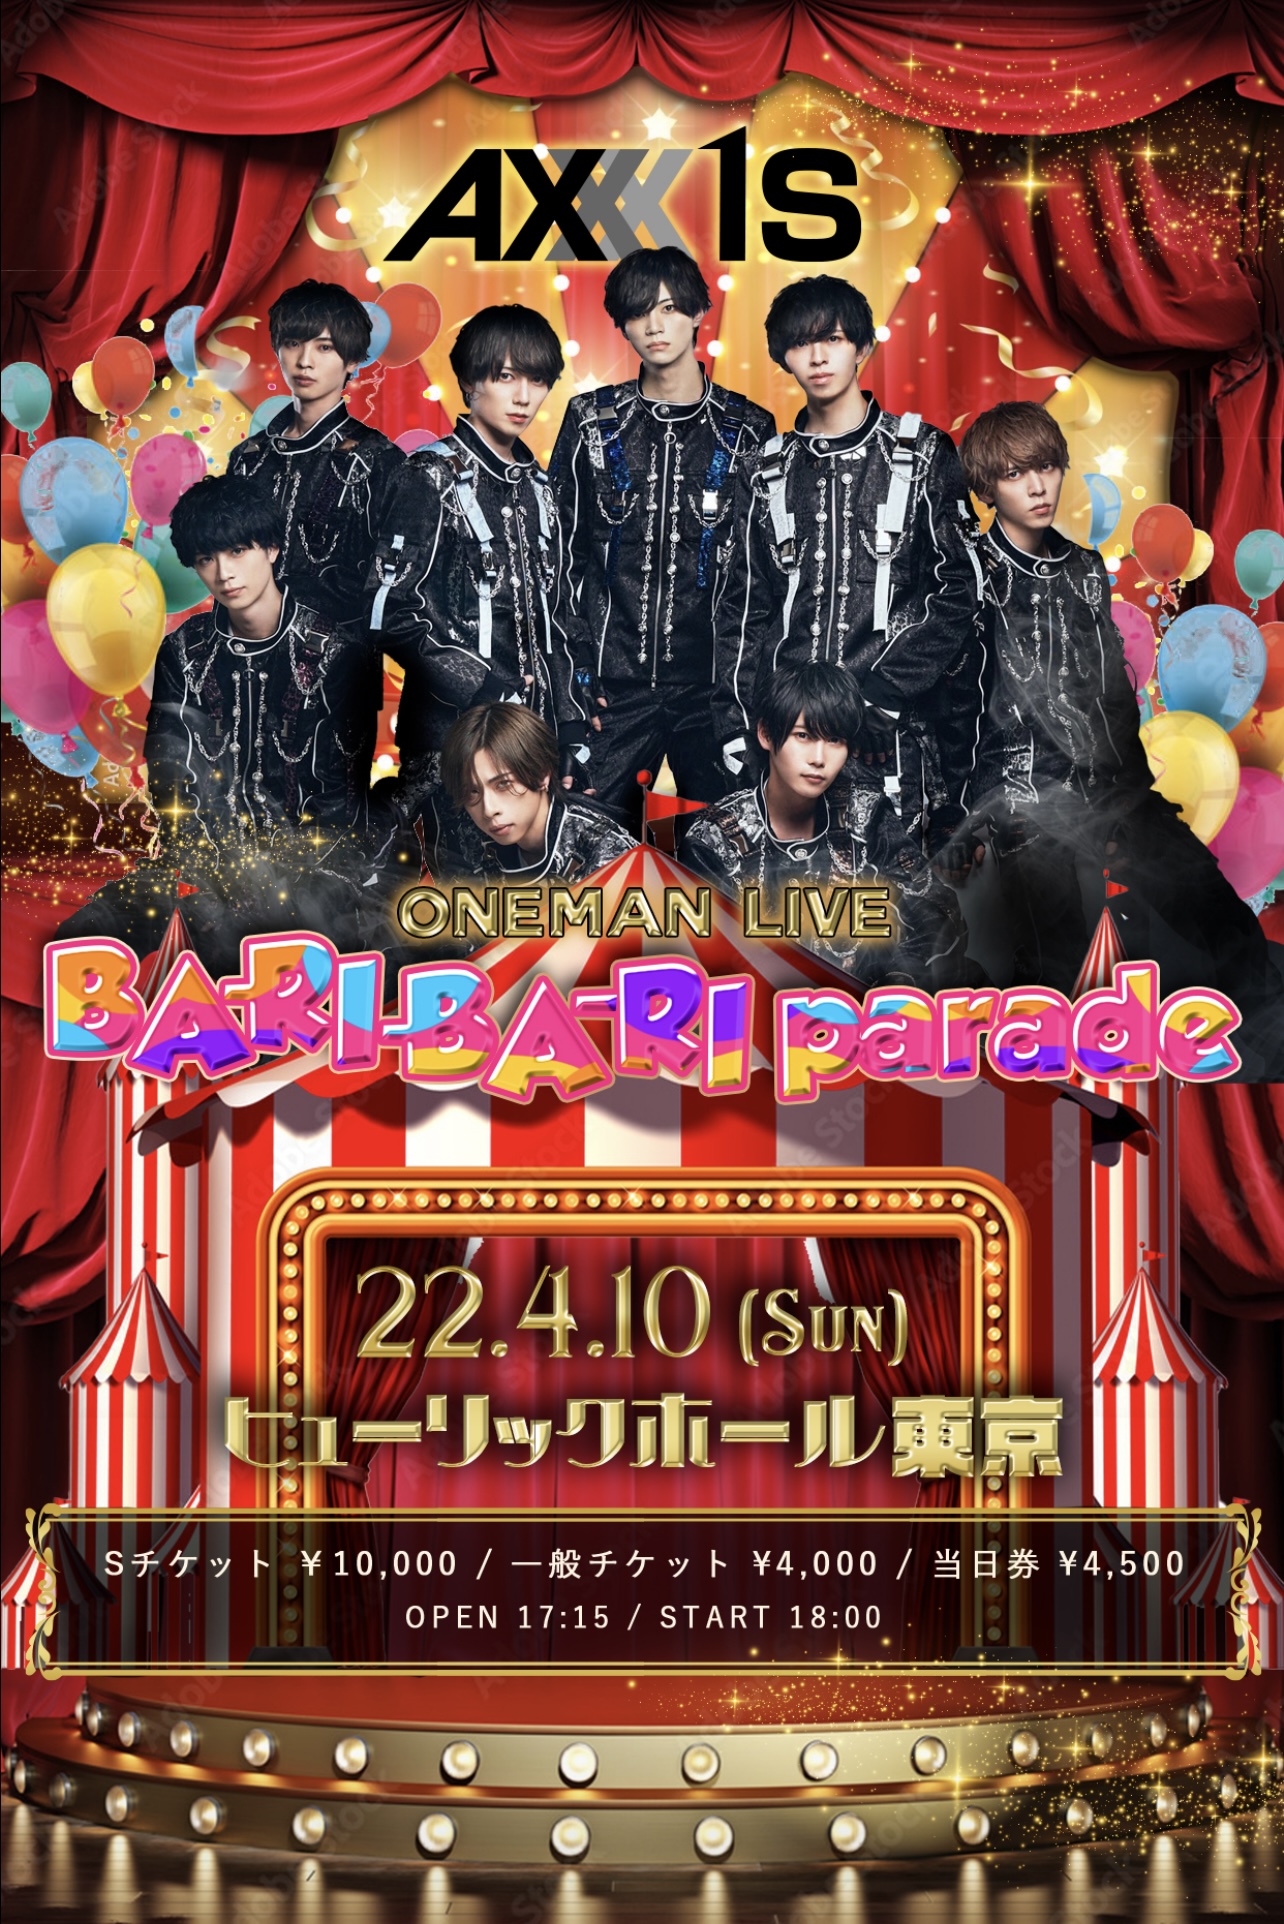 AXXX1S 4/10 ONEMAN LIVE 『BA-RI-BA-RI parade』